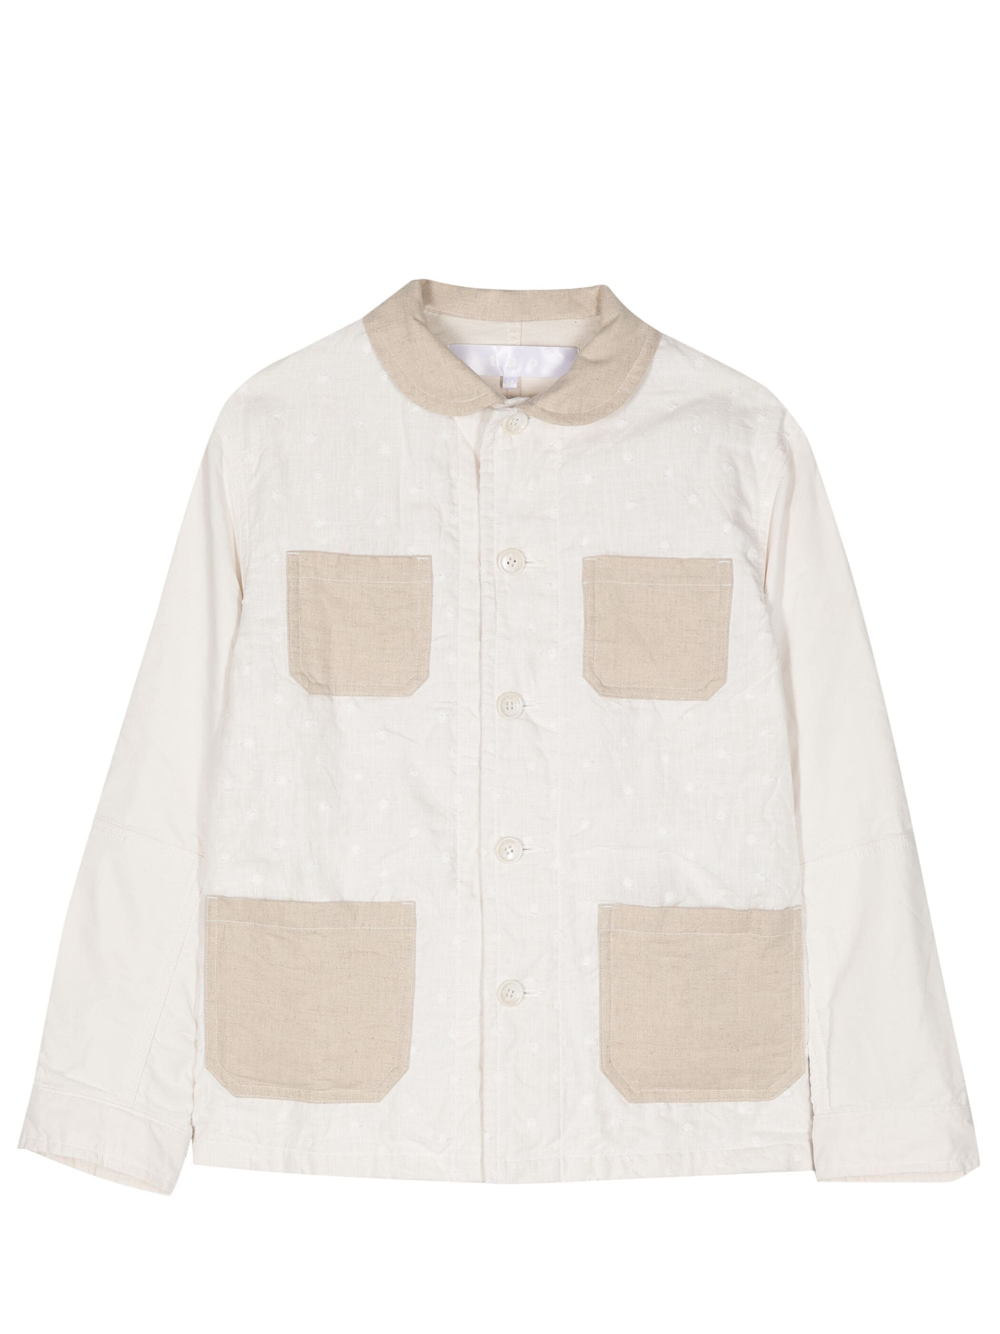 TAO_Cotton_Linen_Cloth_Mix_Garment_Jacket_White